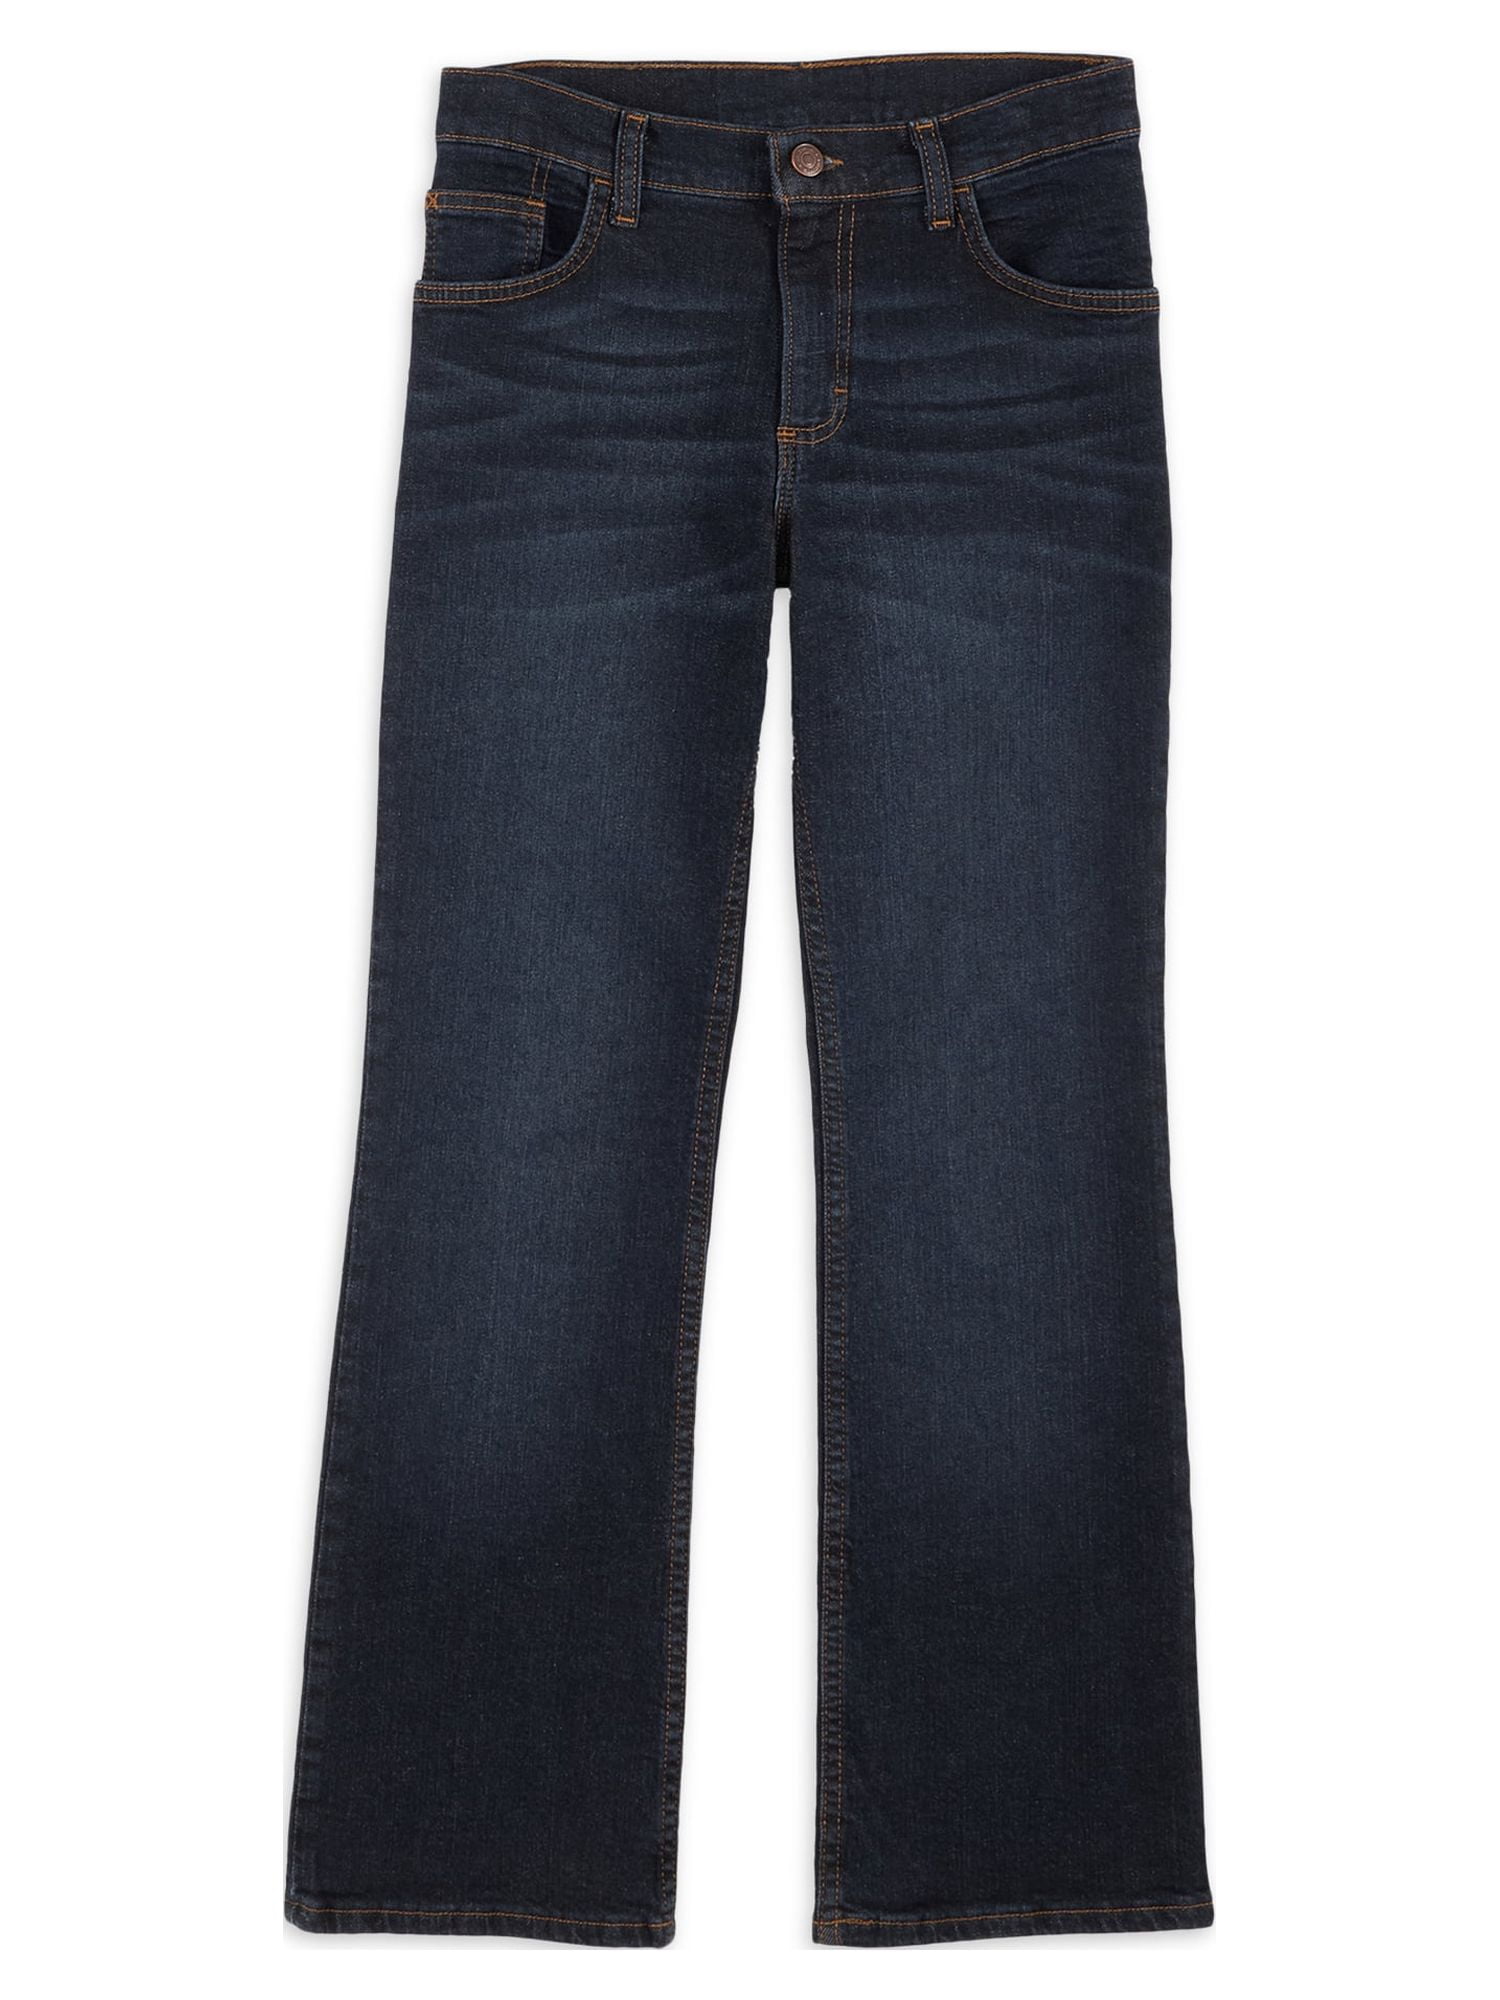 Wrangler Boys Bootcut Denim Jeans Sizes 4 18 Husky cdbb9bd9 ce57 4cb8 b2c8 68034ead9b7b.790c15970a46ca67c0d0814c4e175bde